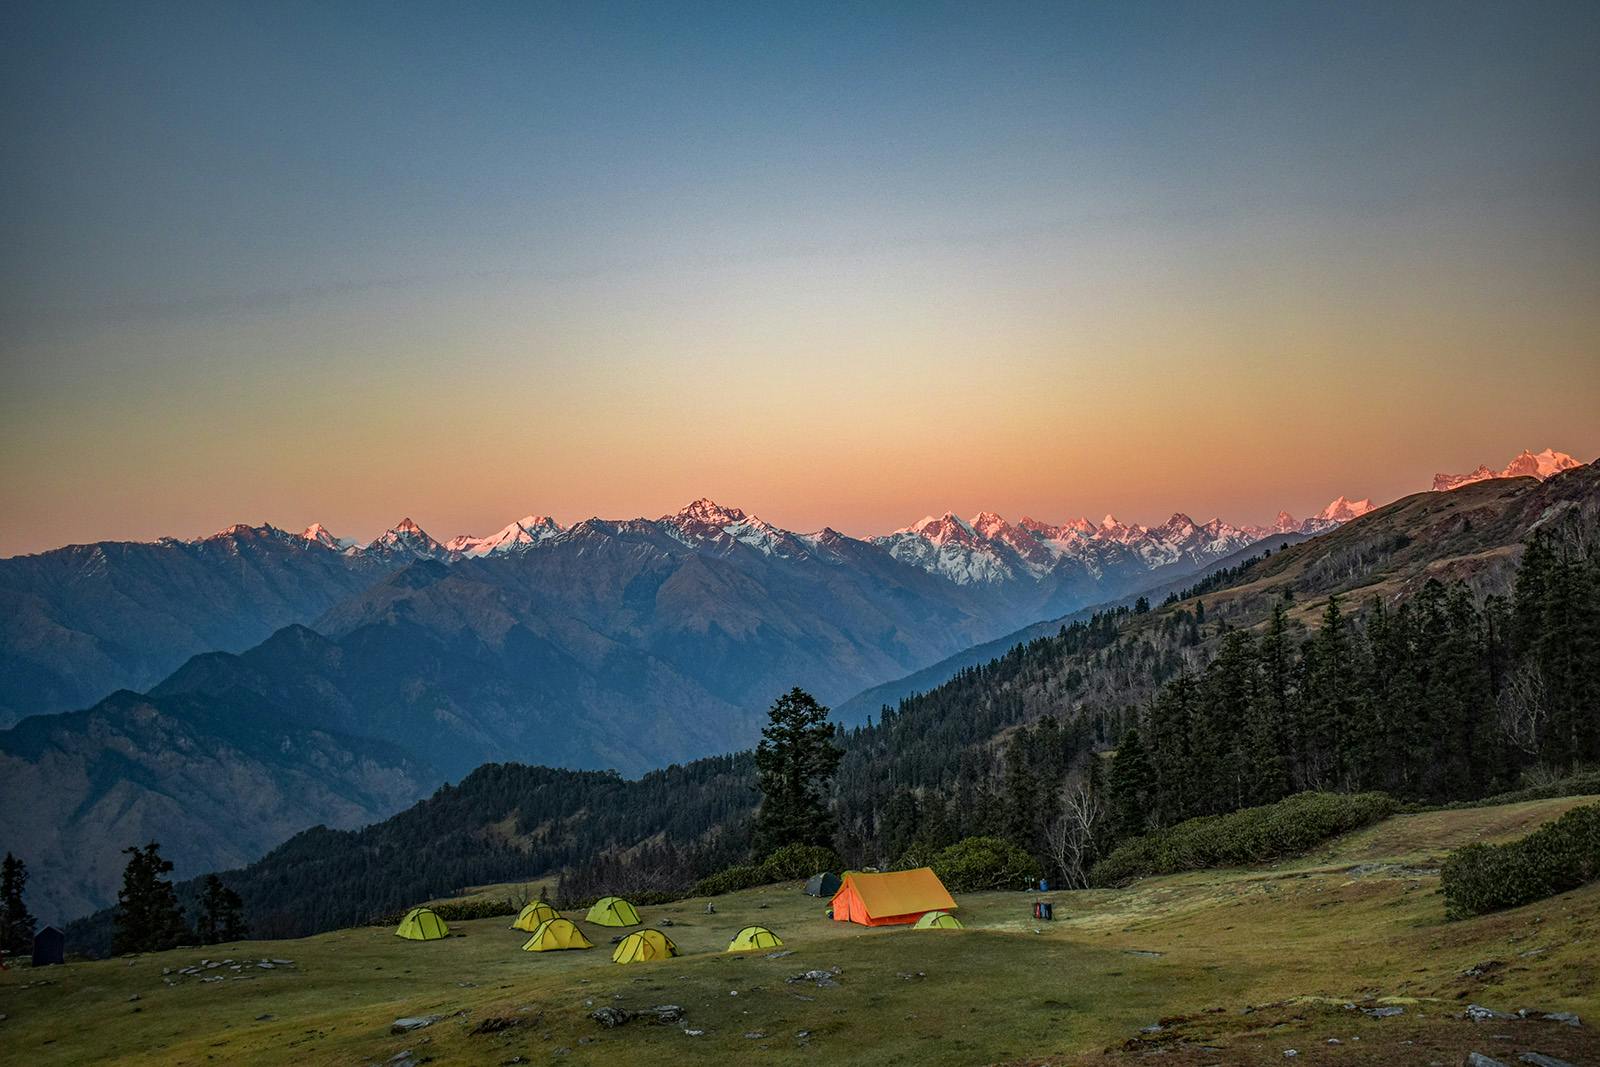 92378 phulara ridge dharun viswanathan alpine glow from bhoj gadi campsite